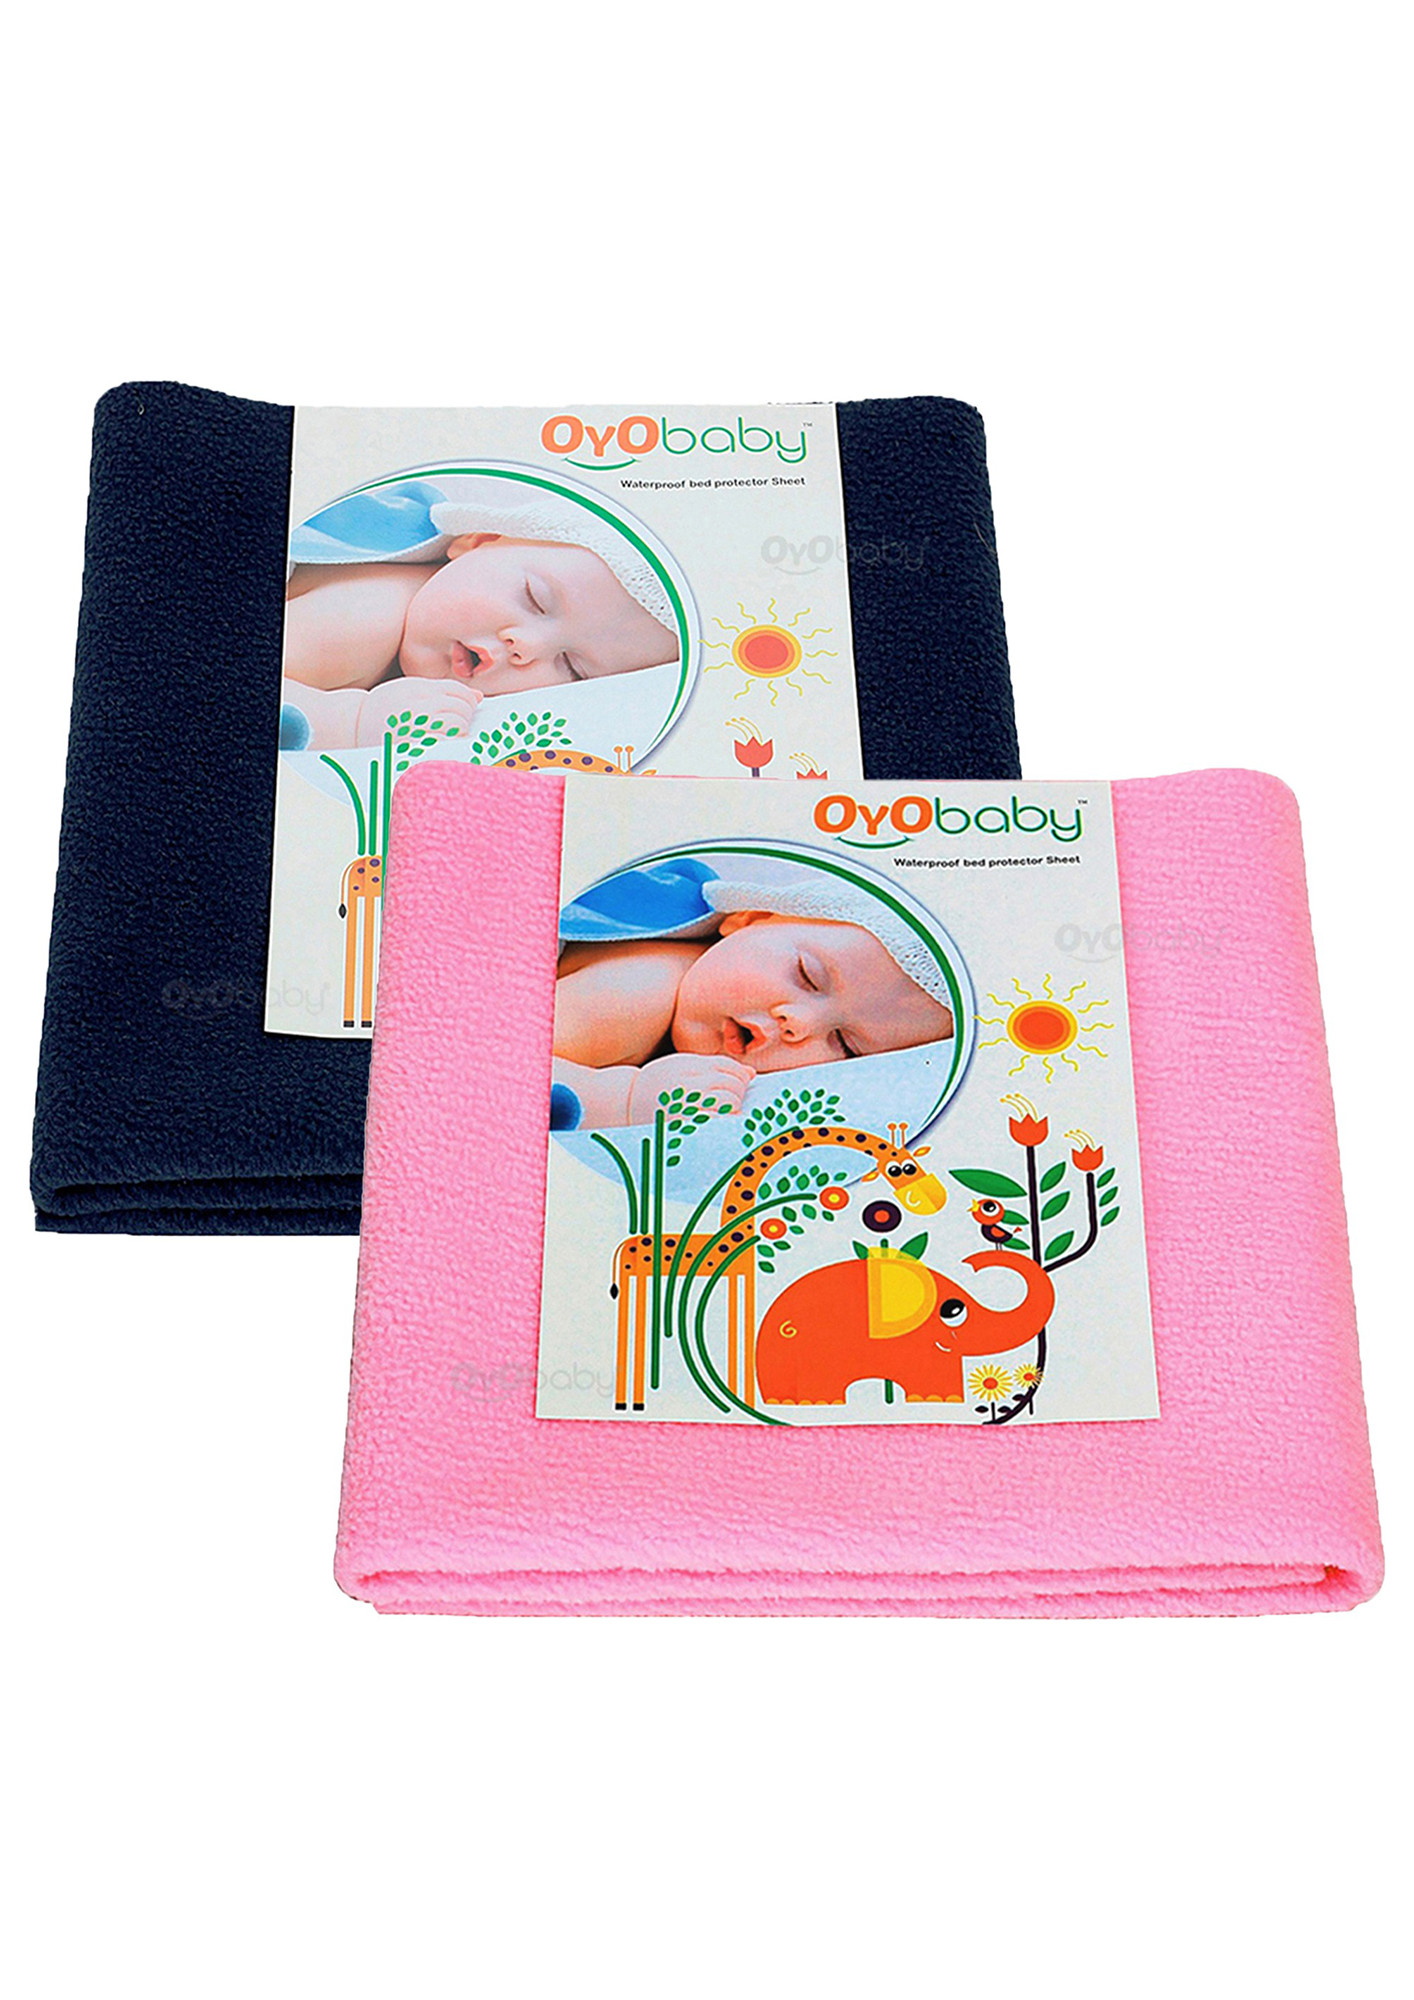 Oyo Baby Baby Bed Protector Sheet, Baby Waterproof Sheet, Baby Dry Sheet Pack Of 2 (Dark Blue, Pink)-OB-2009-DB+P